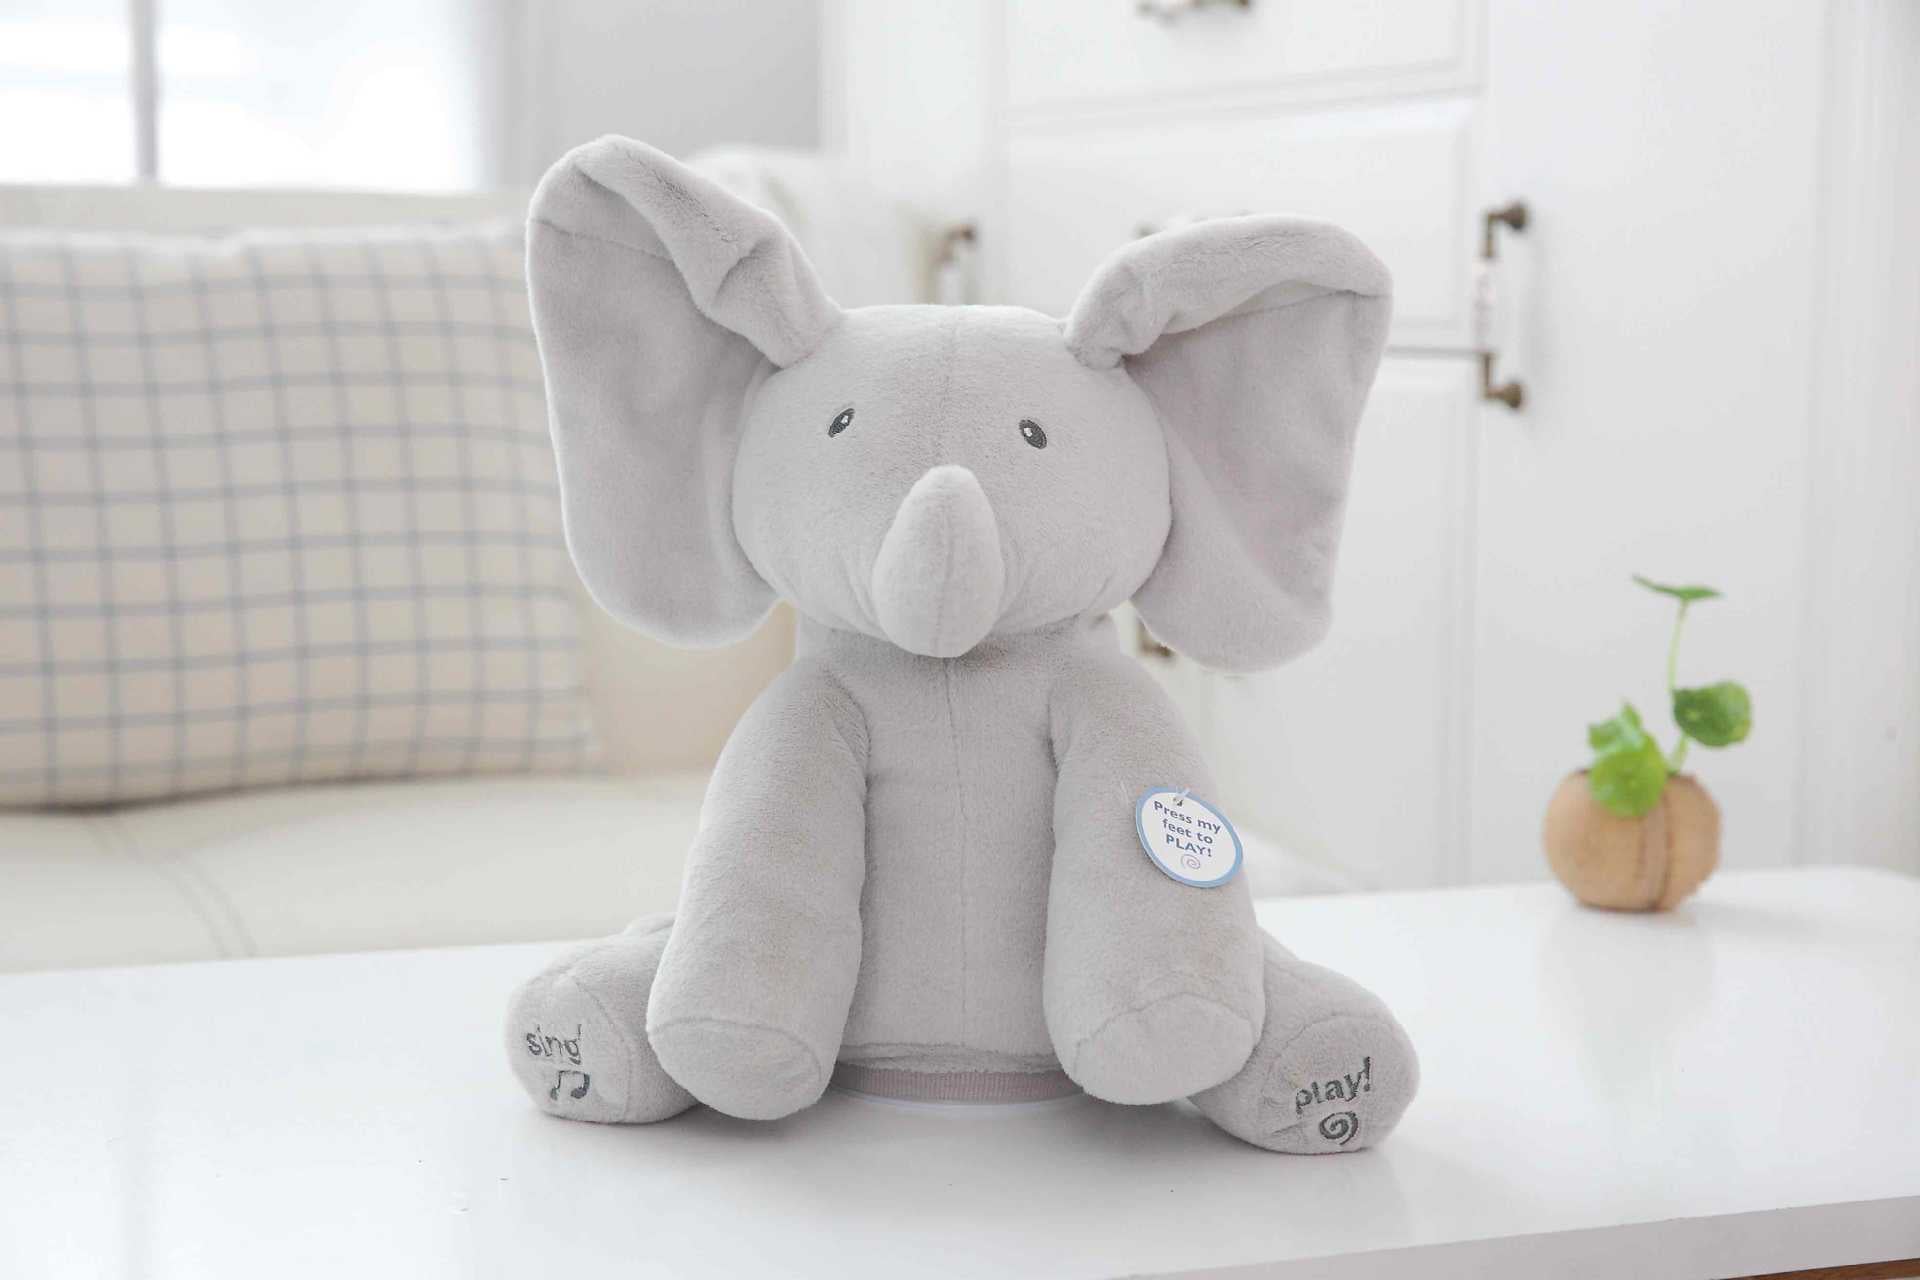 Elly The Animated Peek-A-boo Flappy Elephant Toy